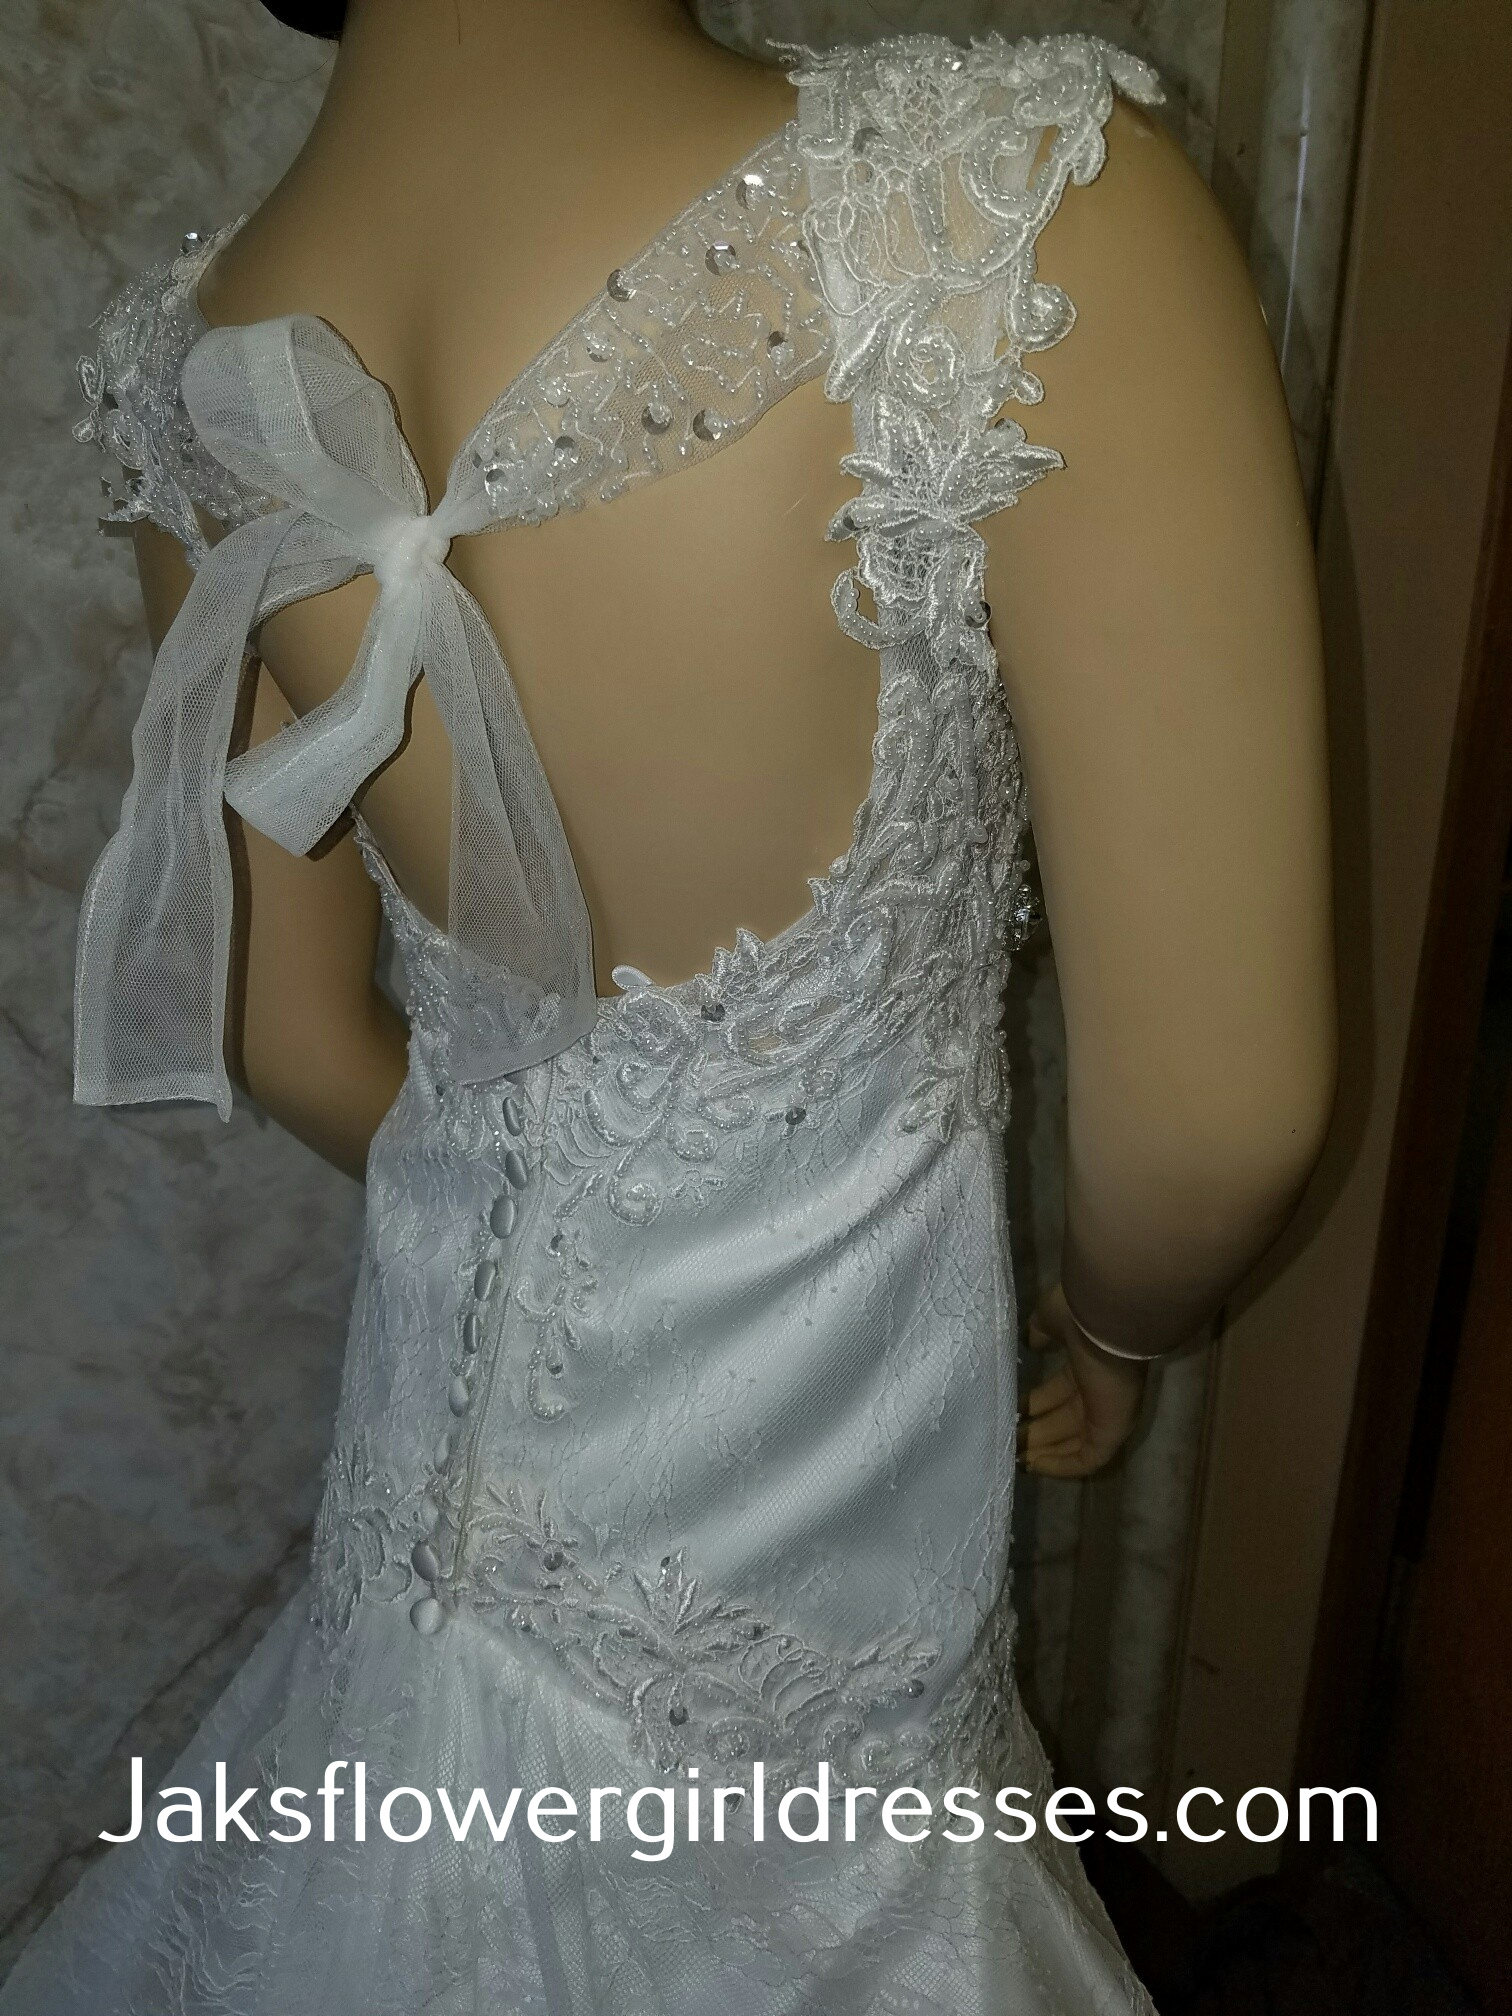 flower girl dresses matching wedding gown